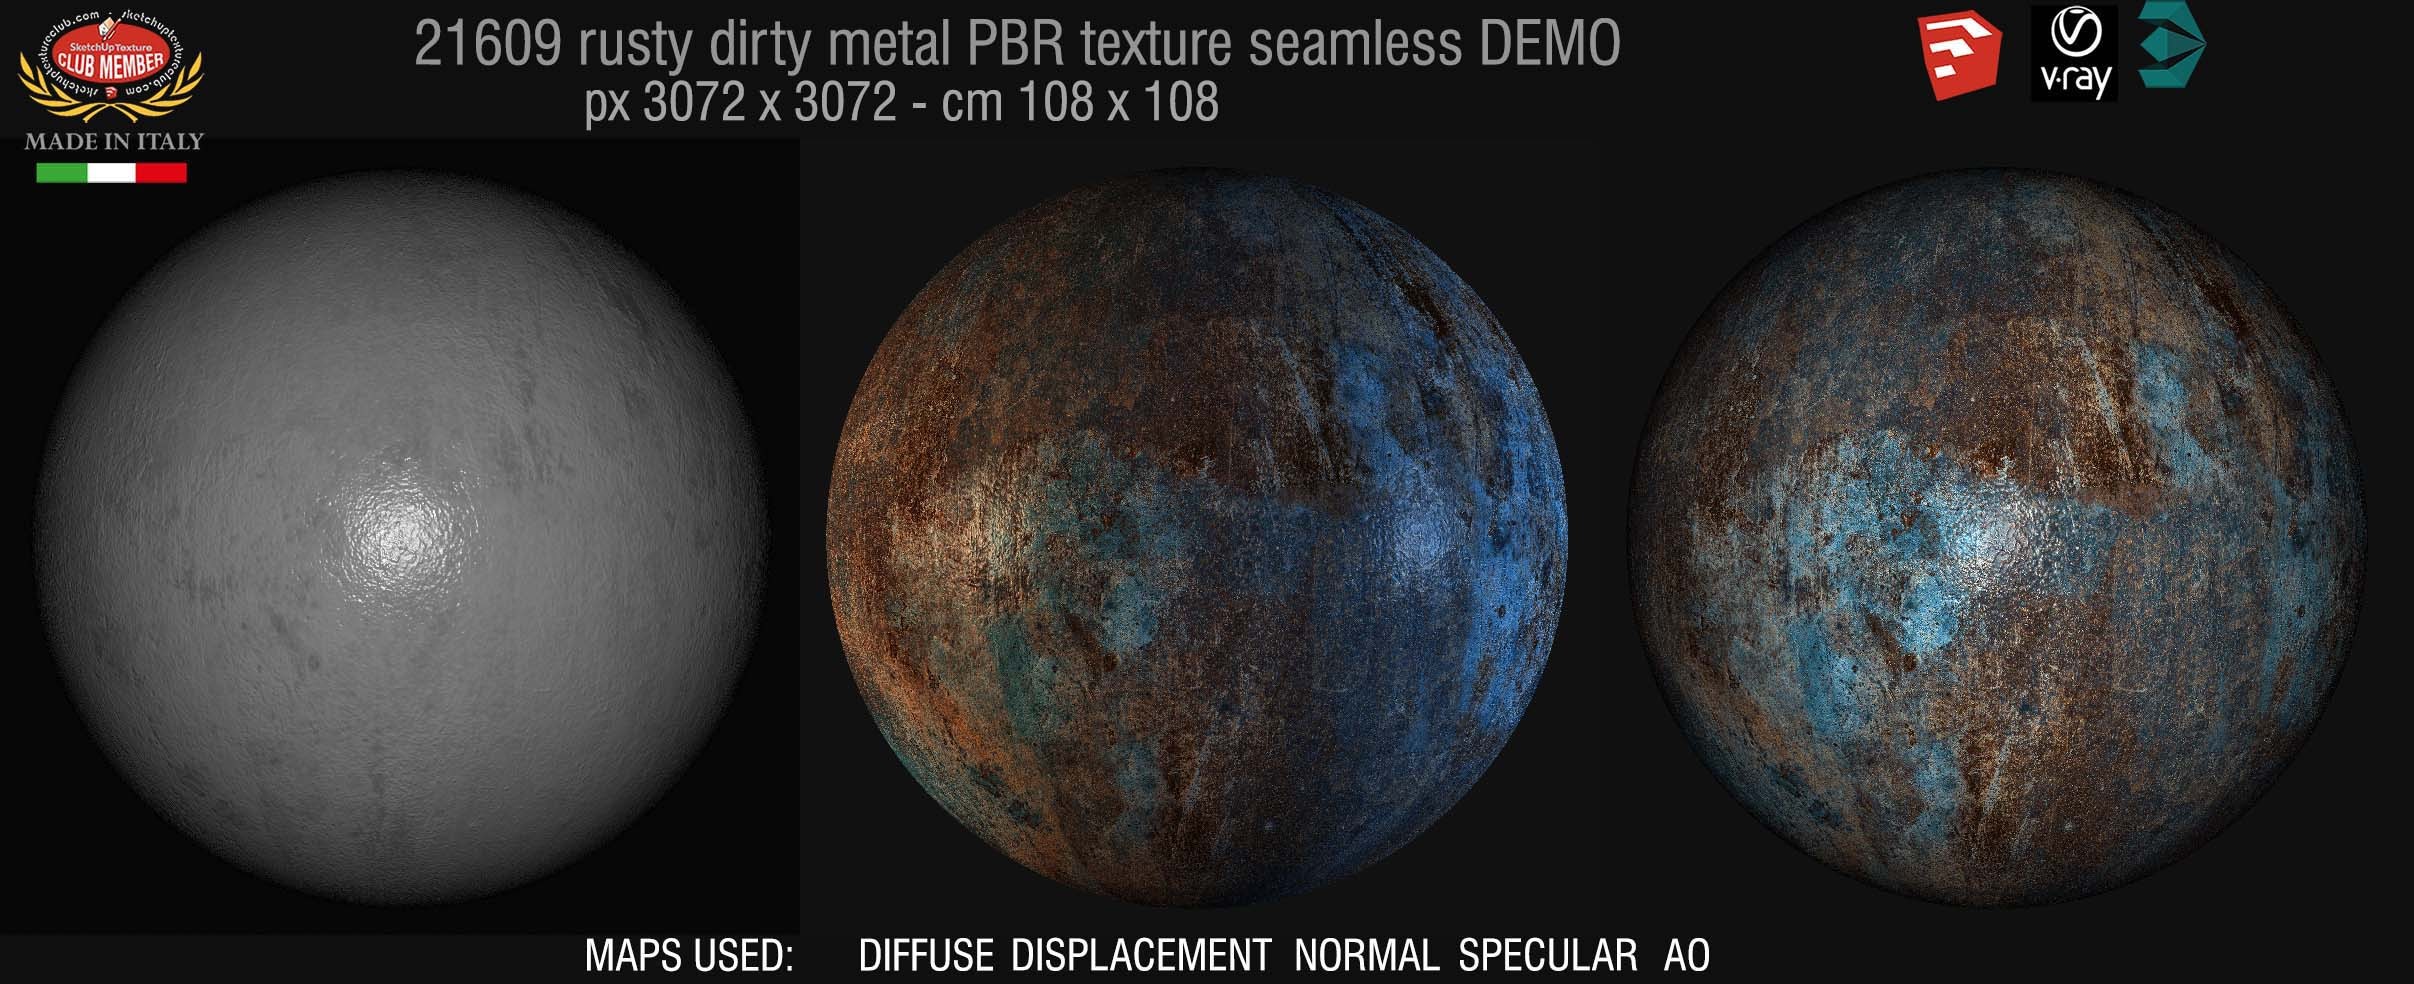 21609 rusty dirty metal PBR texture seamless DEMO